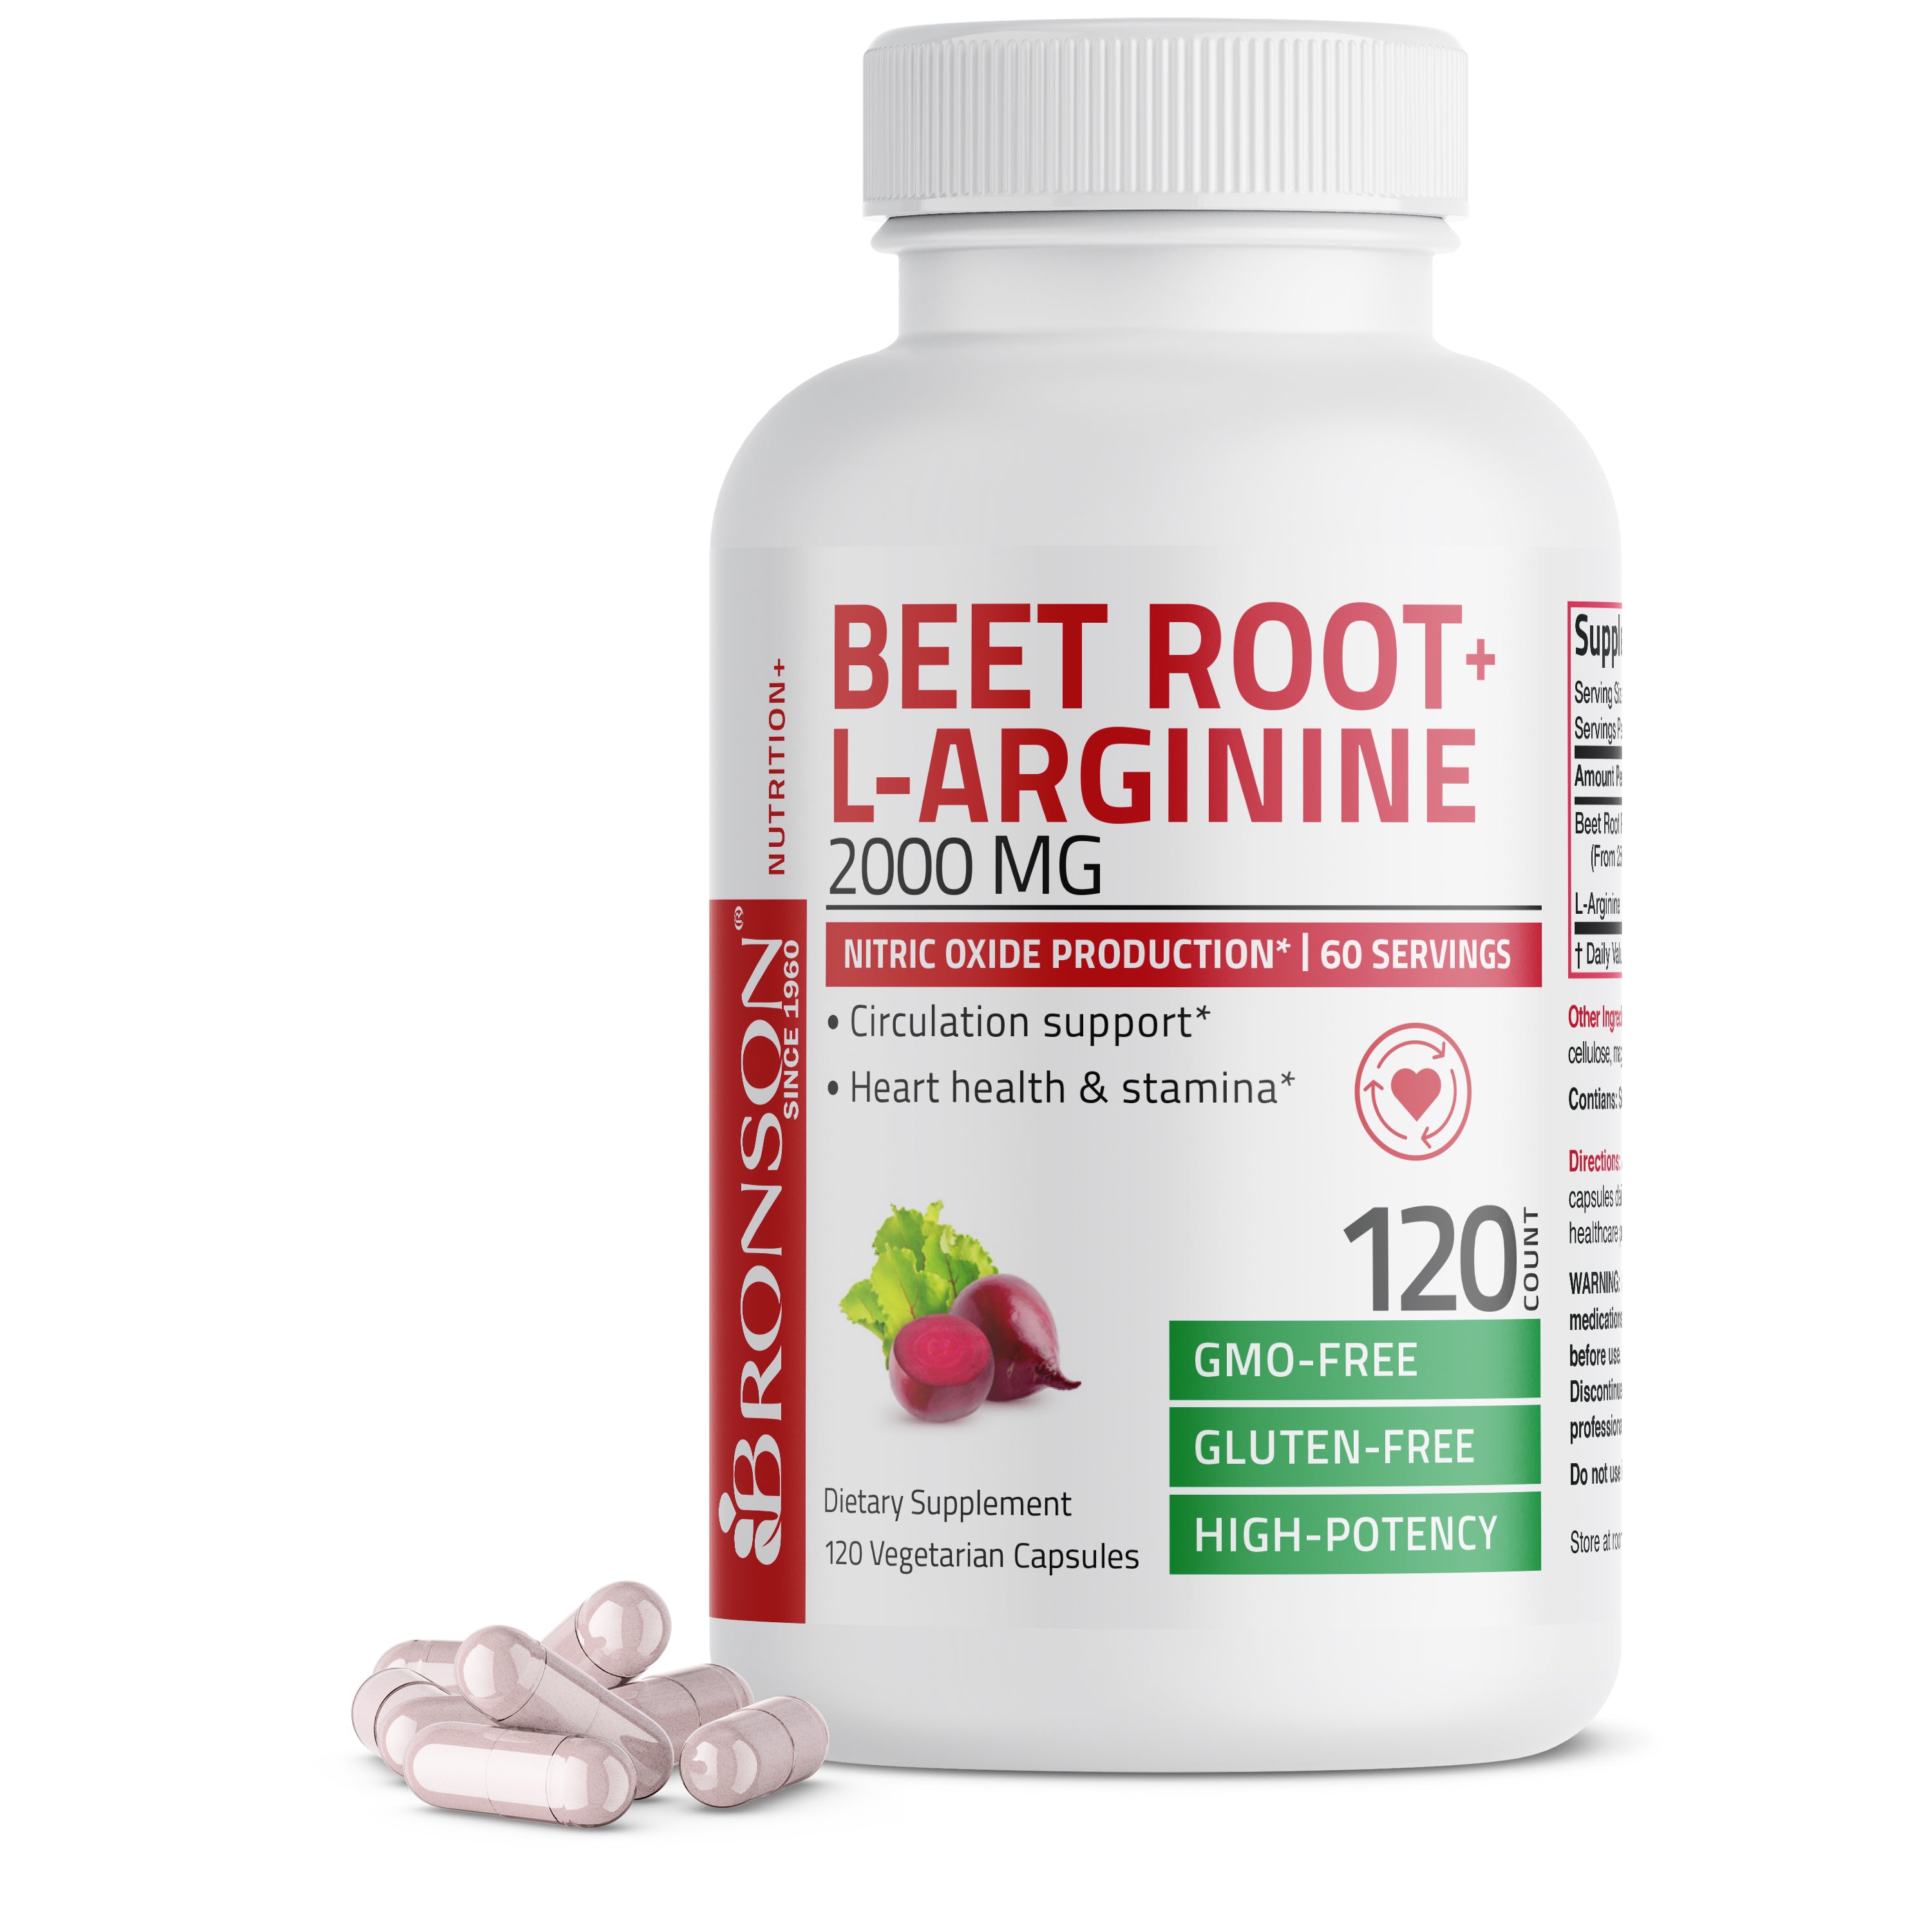 Beet Root + L-Arginine 2000 MG